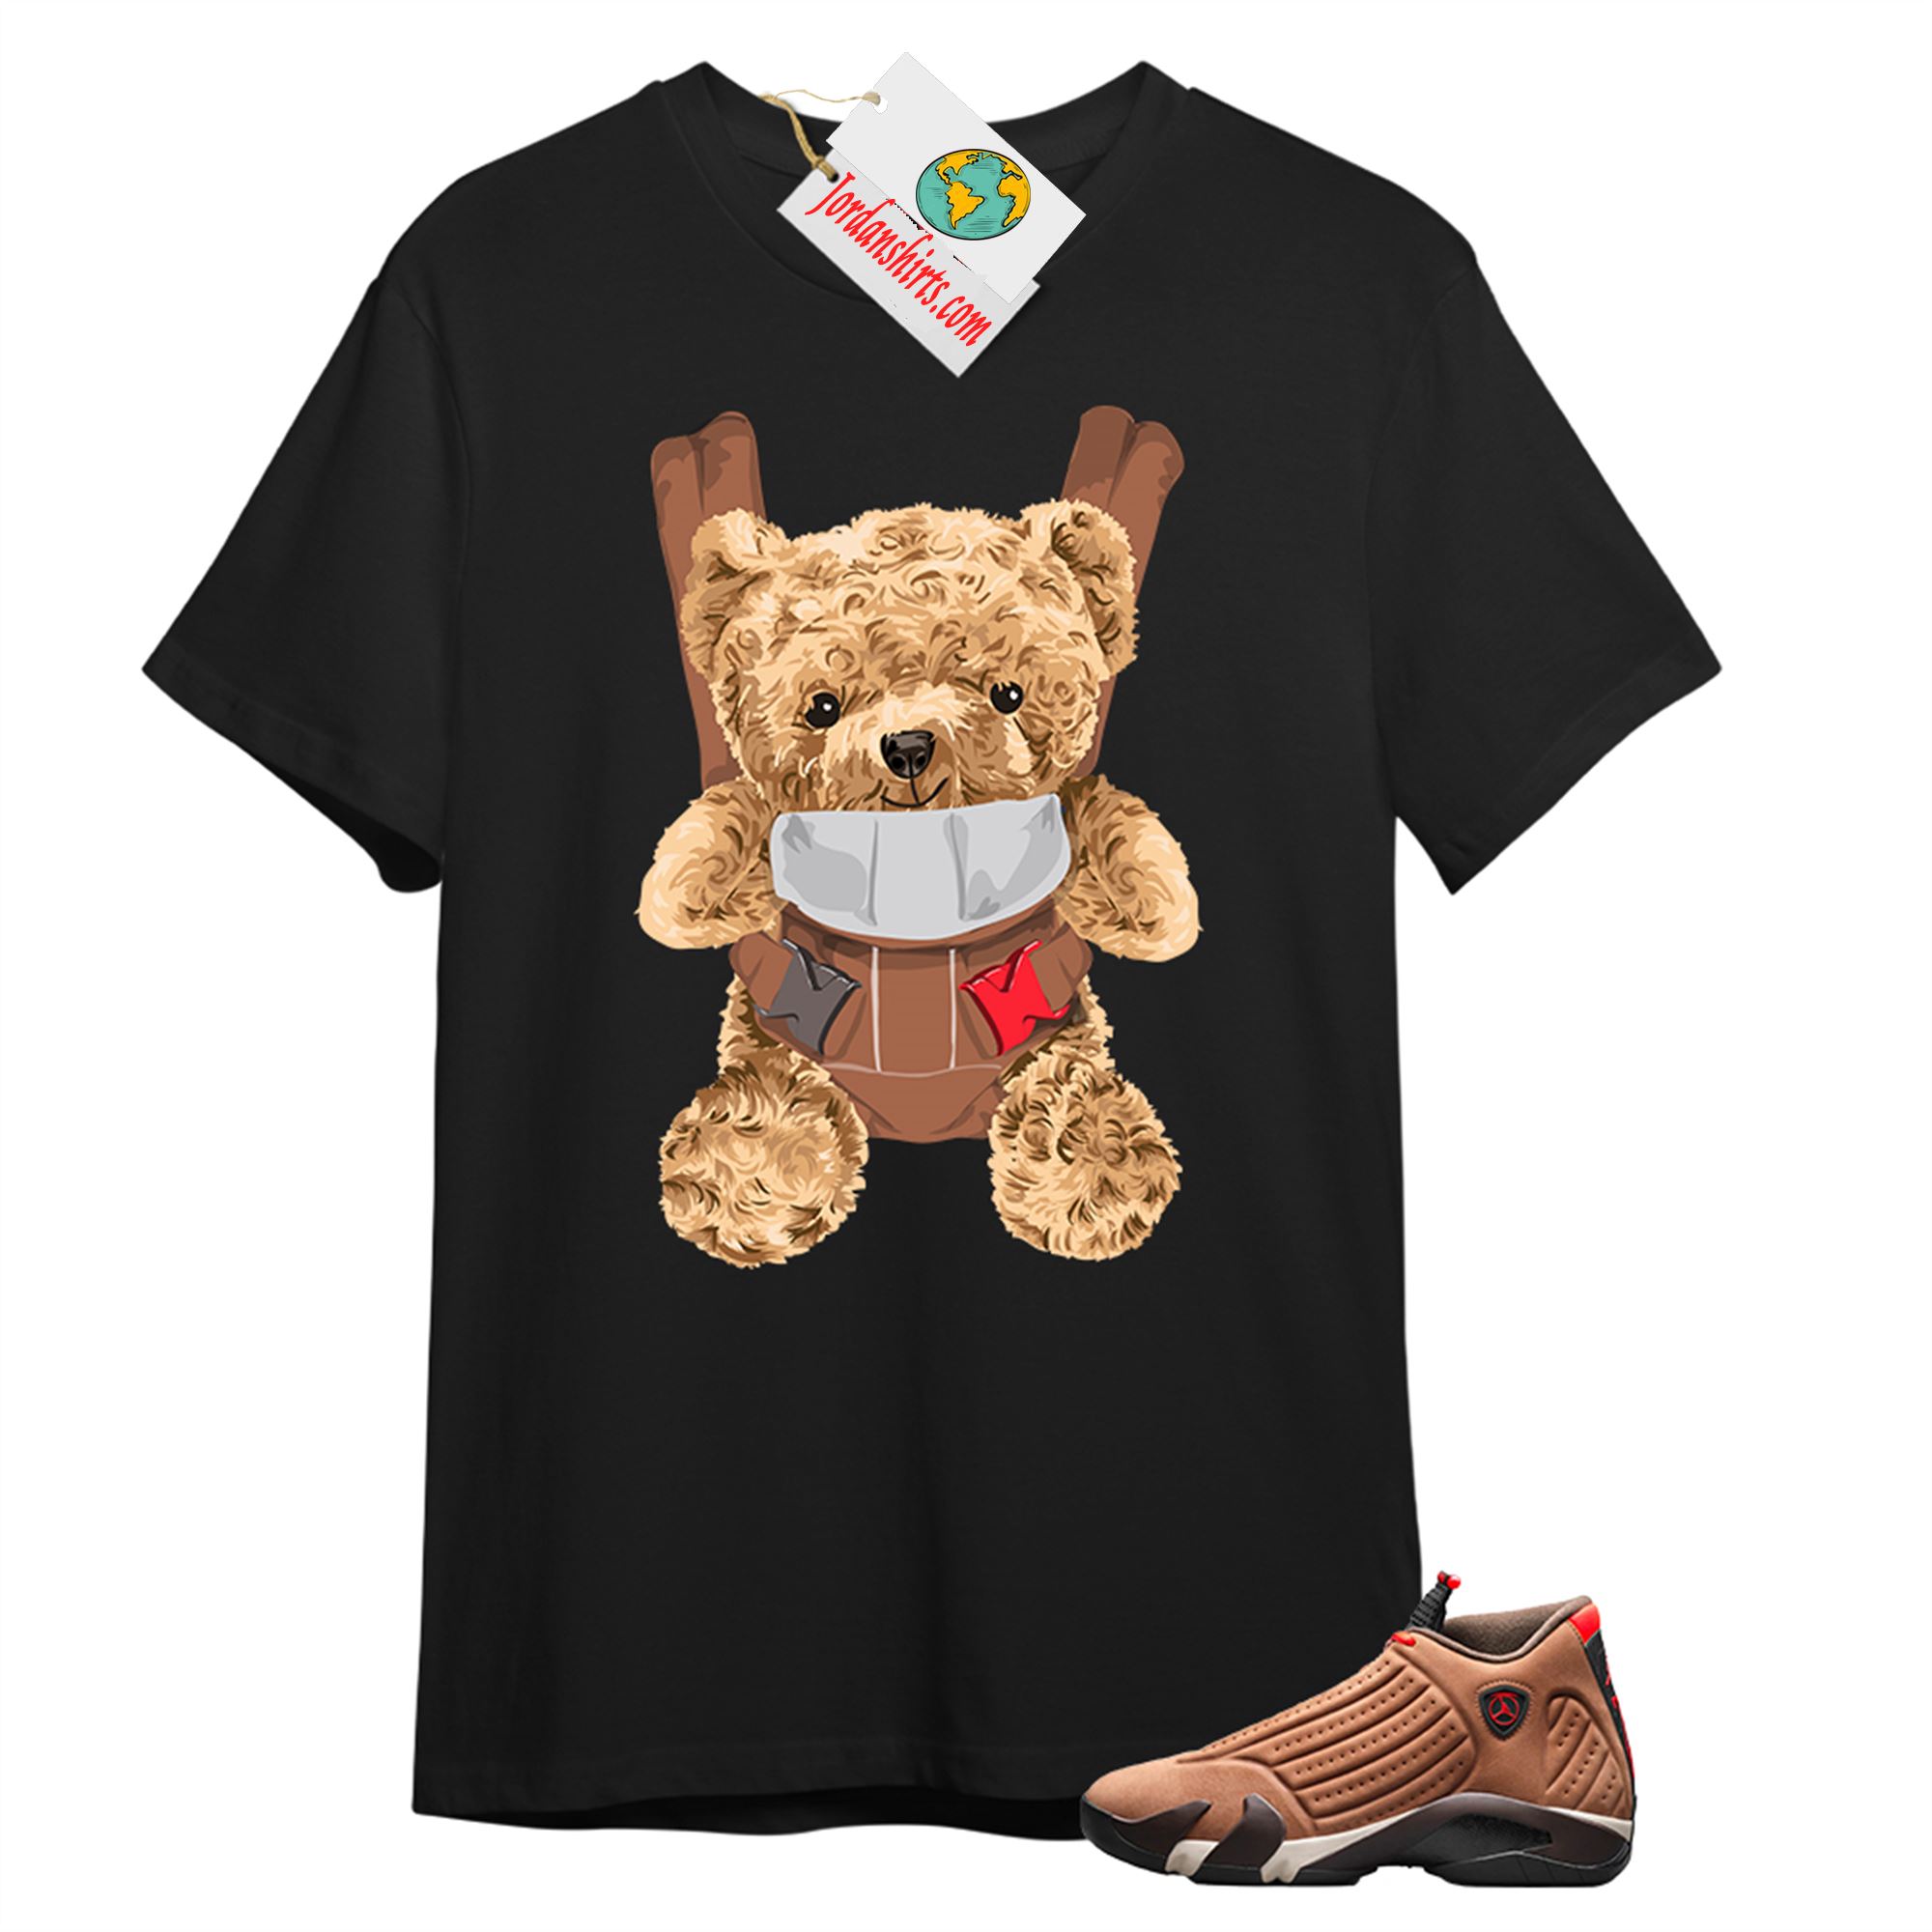 Jordan 14 Shirt, Teddy Bear Bag Black T-shirt Air Jordan 14 Winterized 14s Full Size Up To 5xl